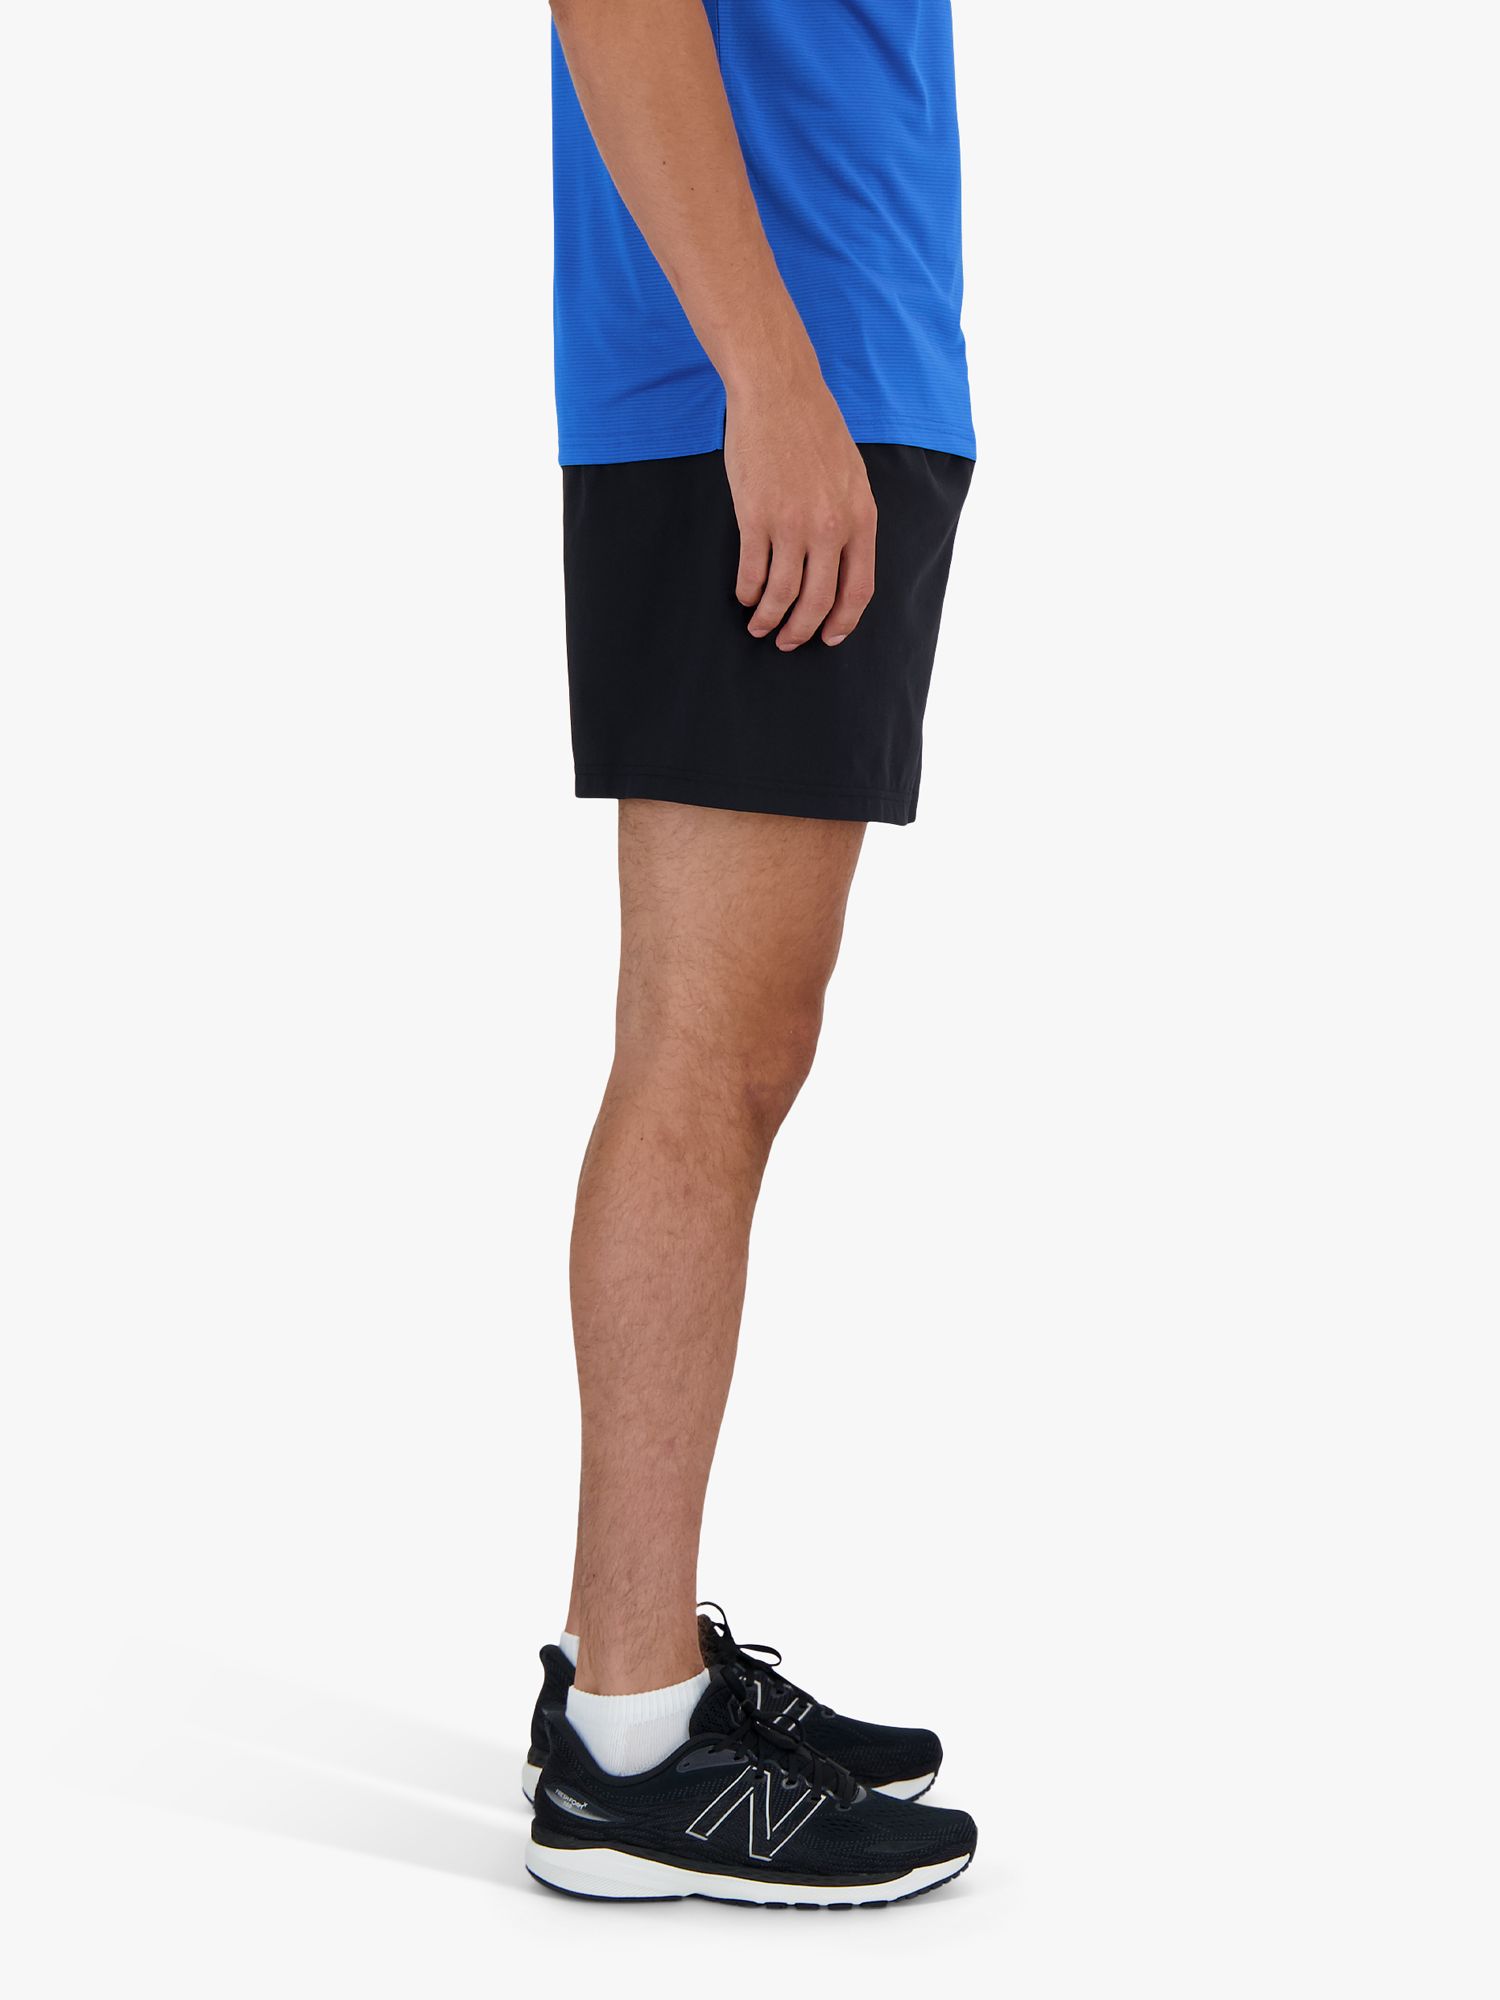 New Balance Logo Shorts, Black, XL